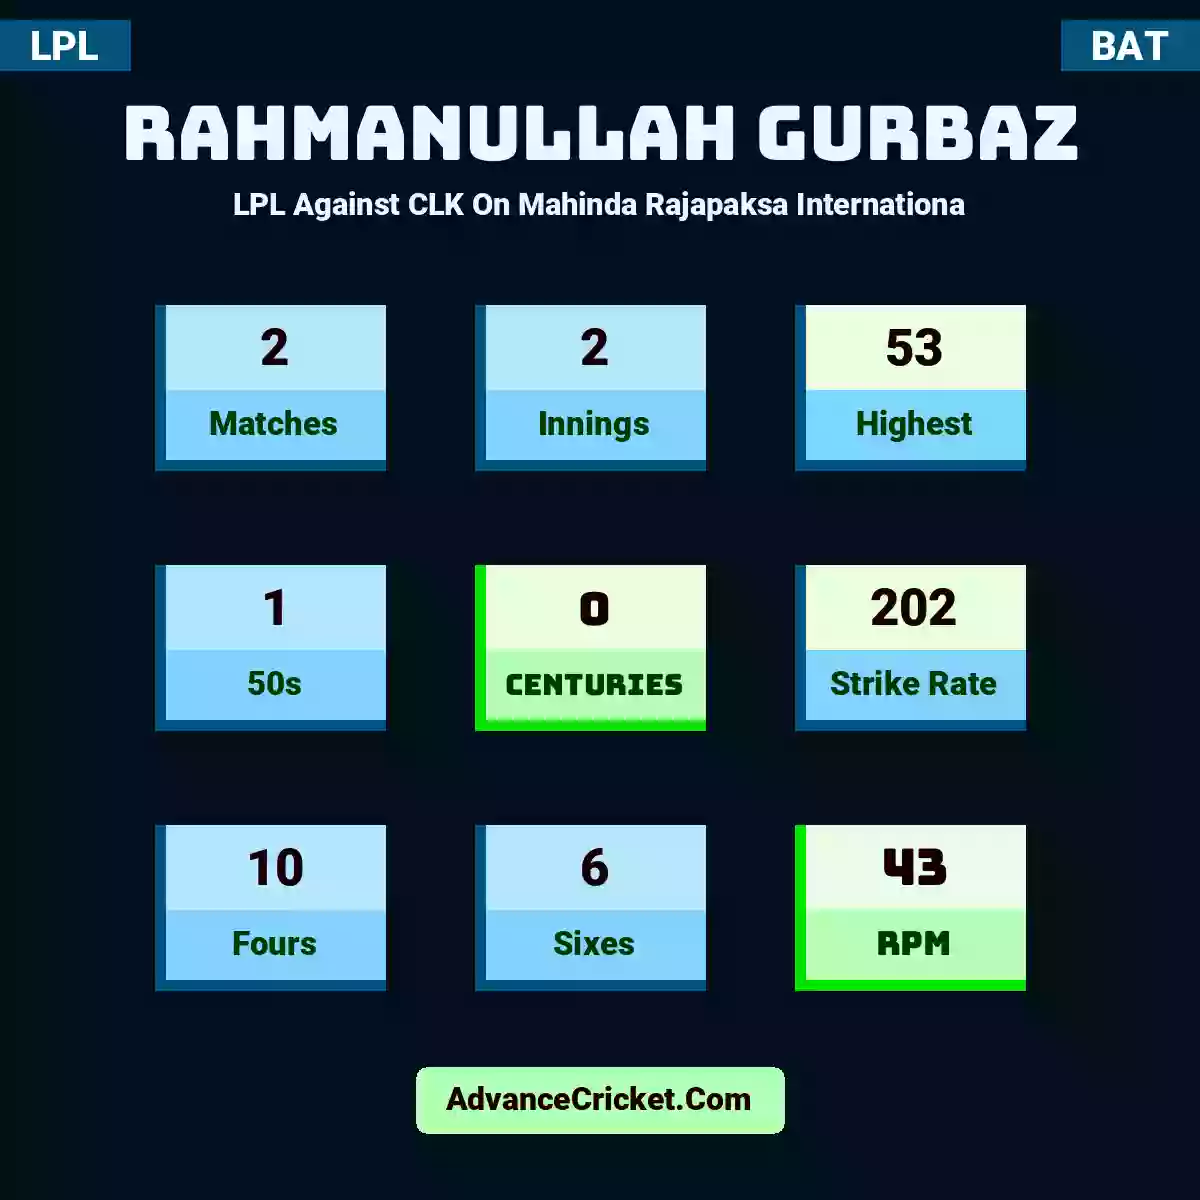 Rahmanullah Gurbaz LPL  Against CLK On Mahinda Rajapaksa Internationa, Rahmanullah Gurbaz played 2 matches, scored 53 runs as highest, 1 half-centuries, and 0 centuries, with a strike rate of 202. R.Gurbaz hit 10 fours and 6 sixes, with an RPM of 43.